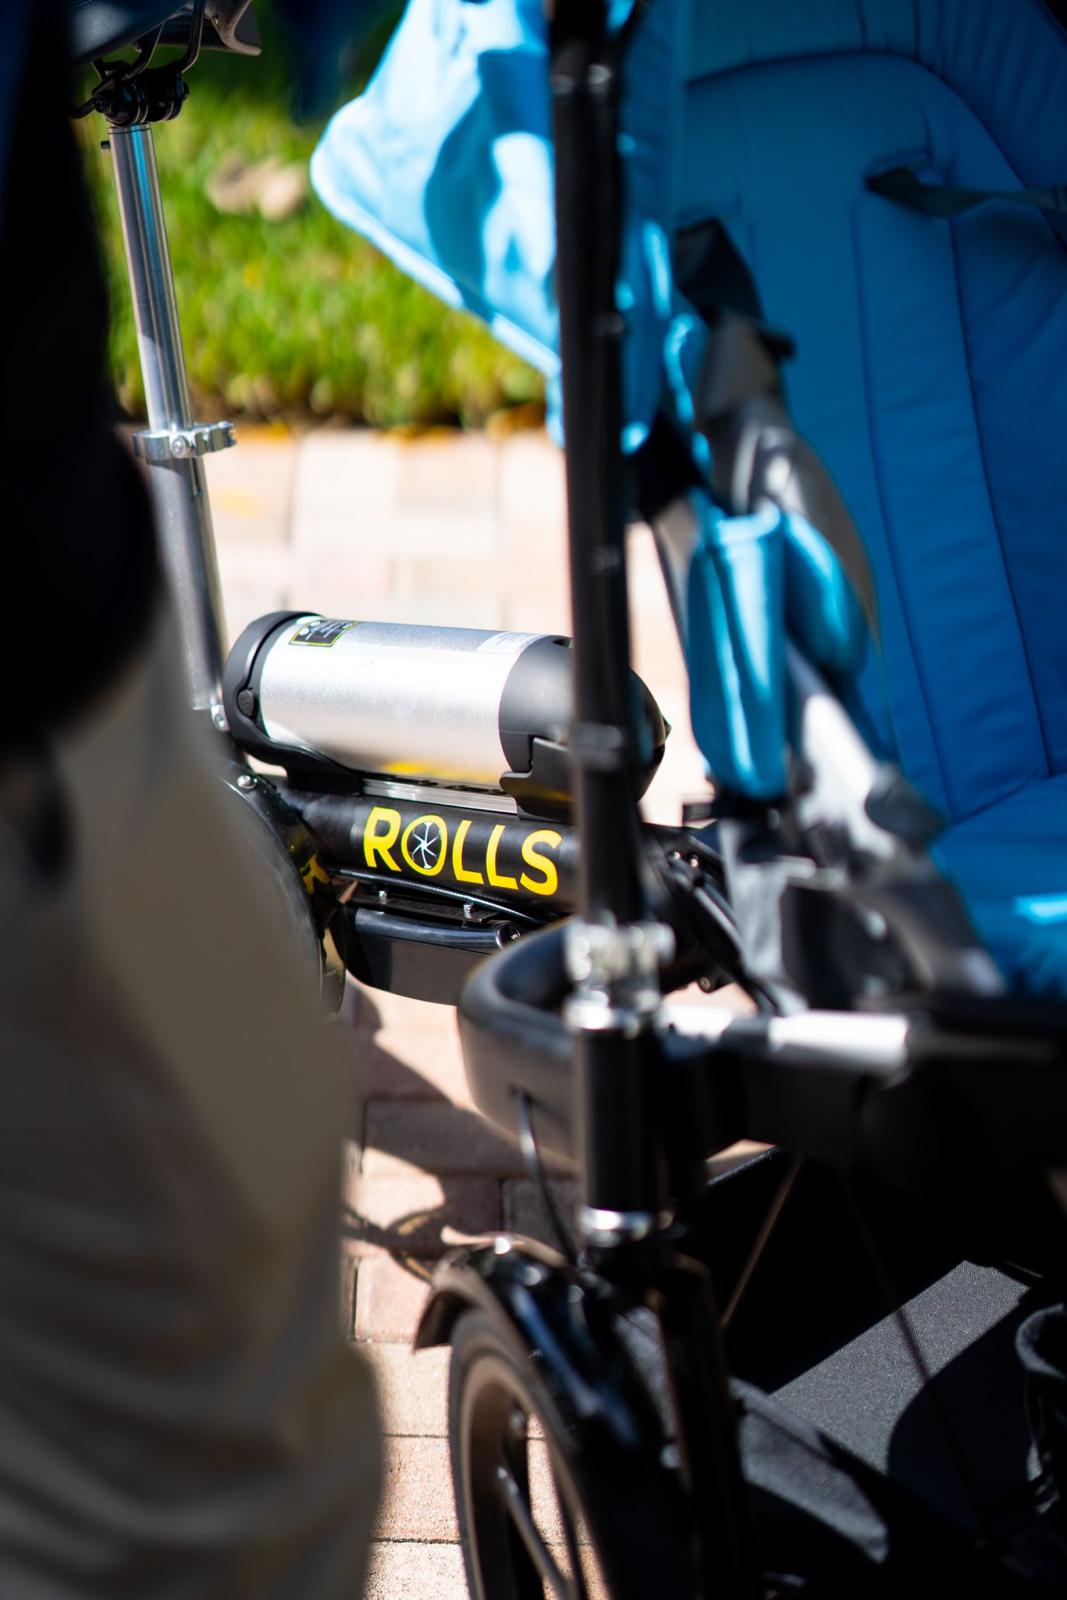 Rolls Electric bike